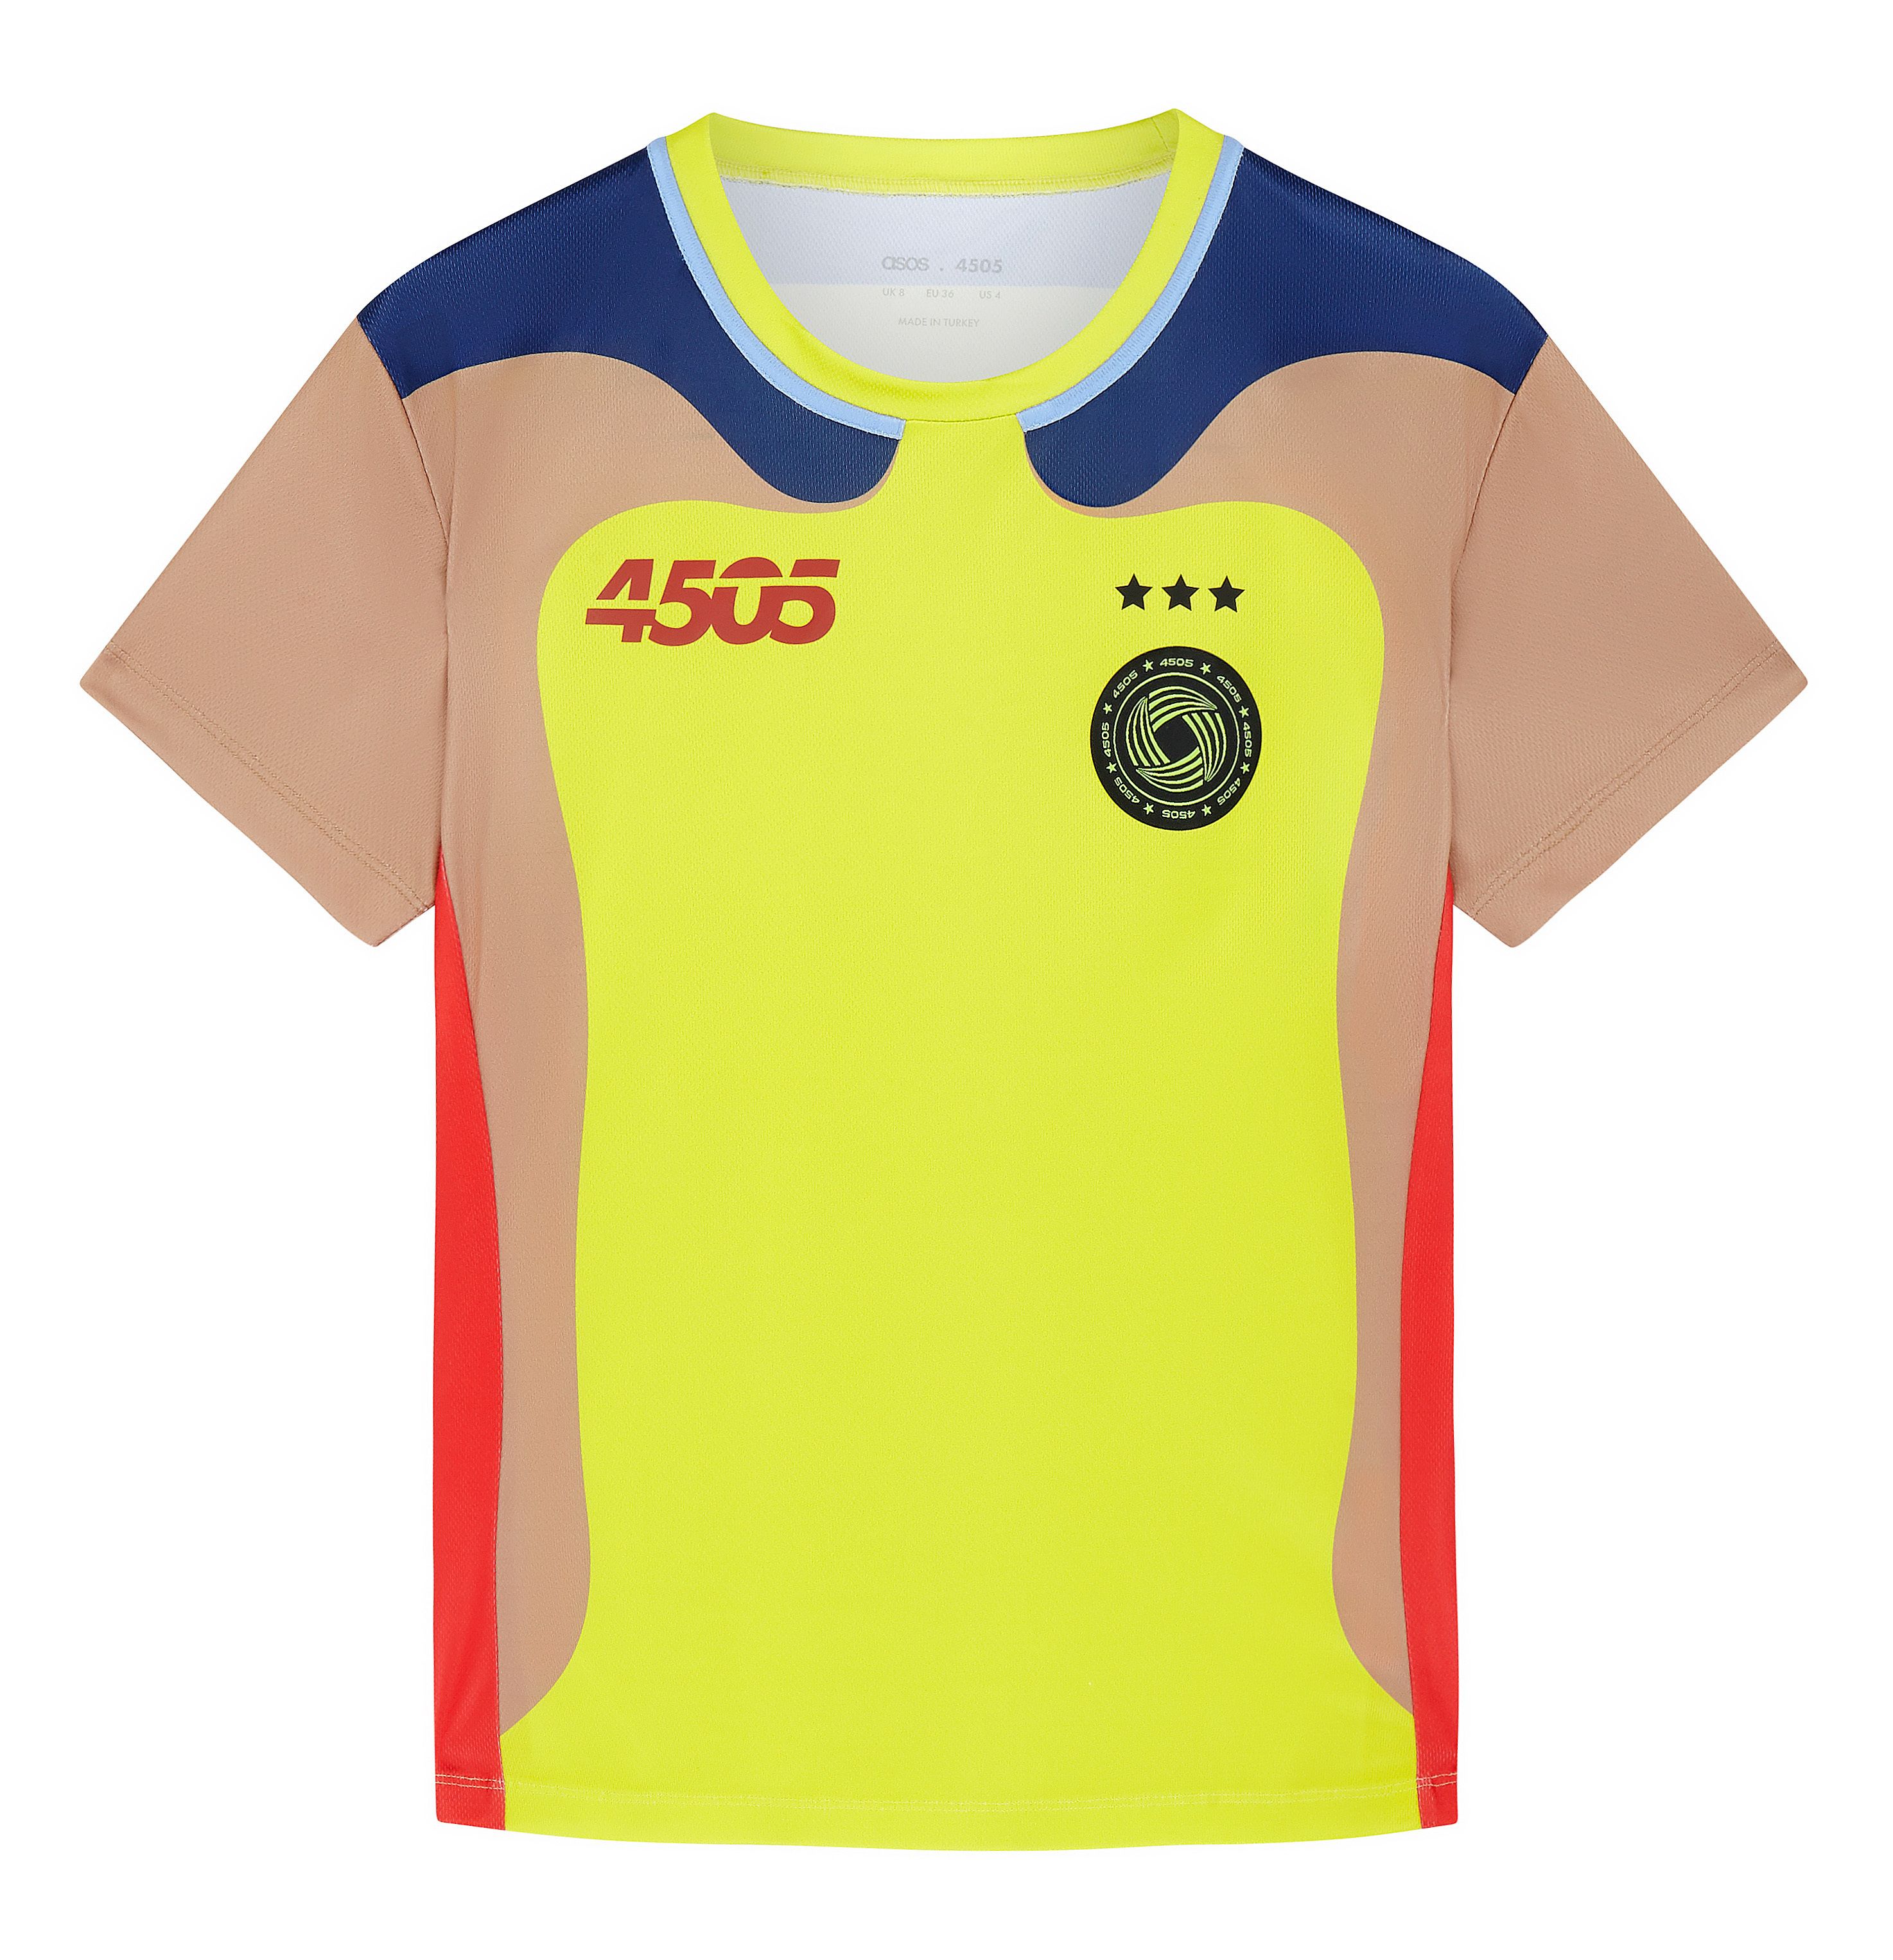 Camisetas de fútbol para mujer Asos - Equipación de fútbol femenino Asos